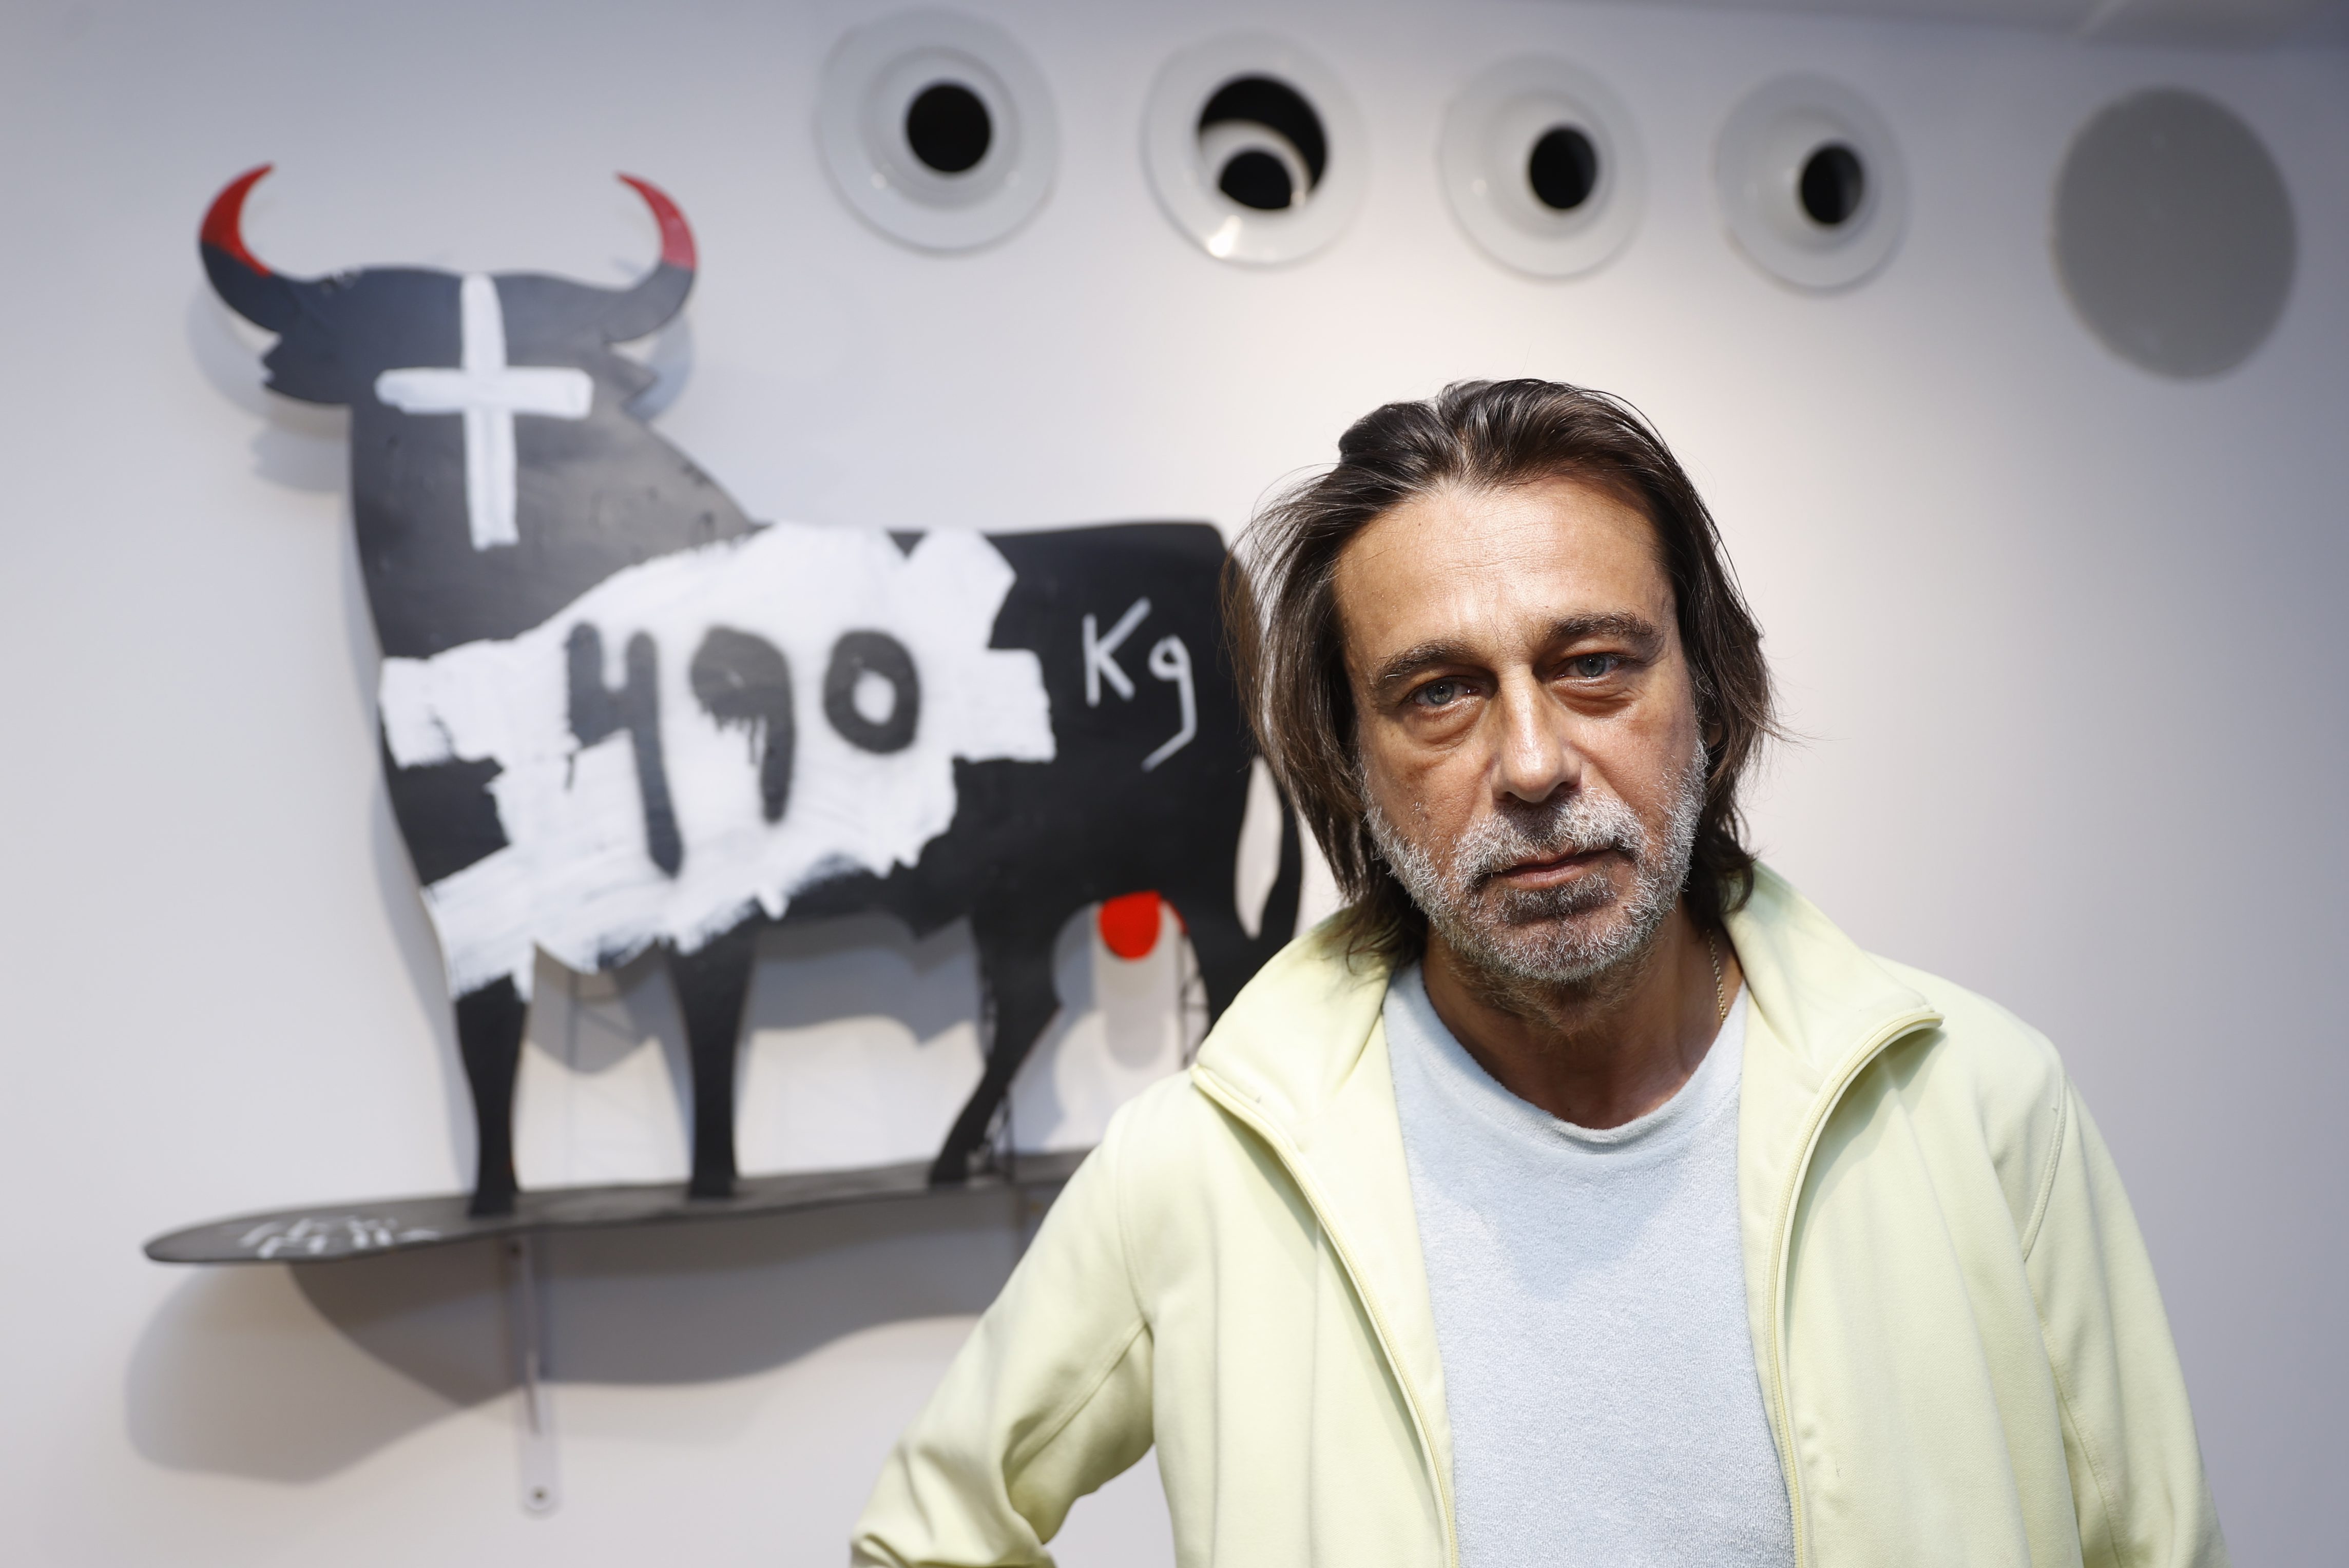 Jordi Mollà in his exhibition 'The art of transcending'.